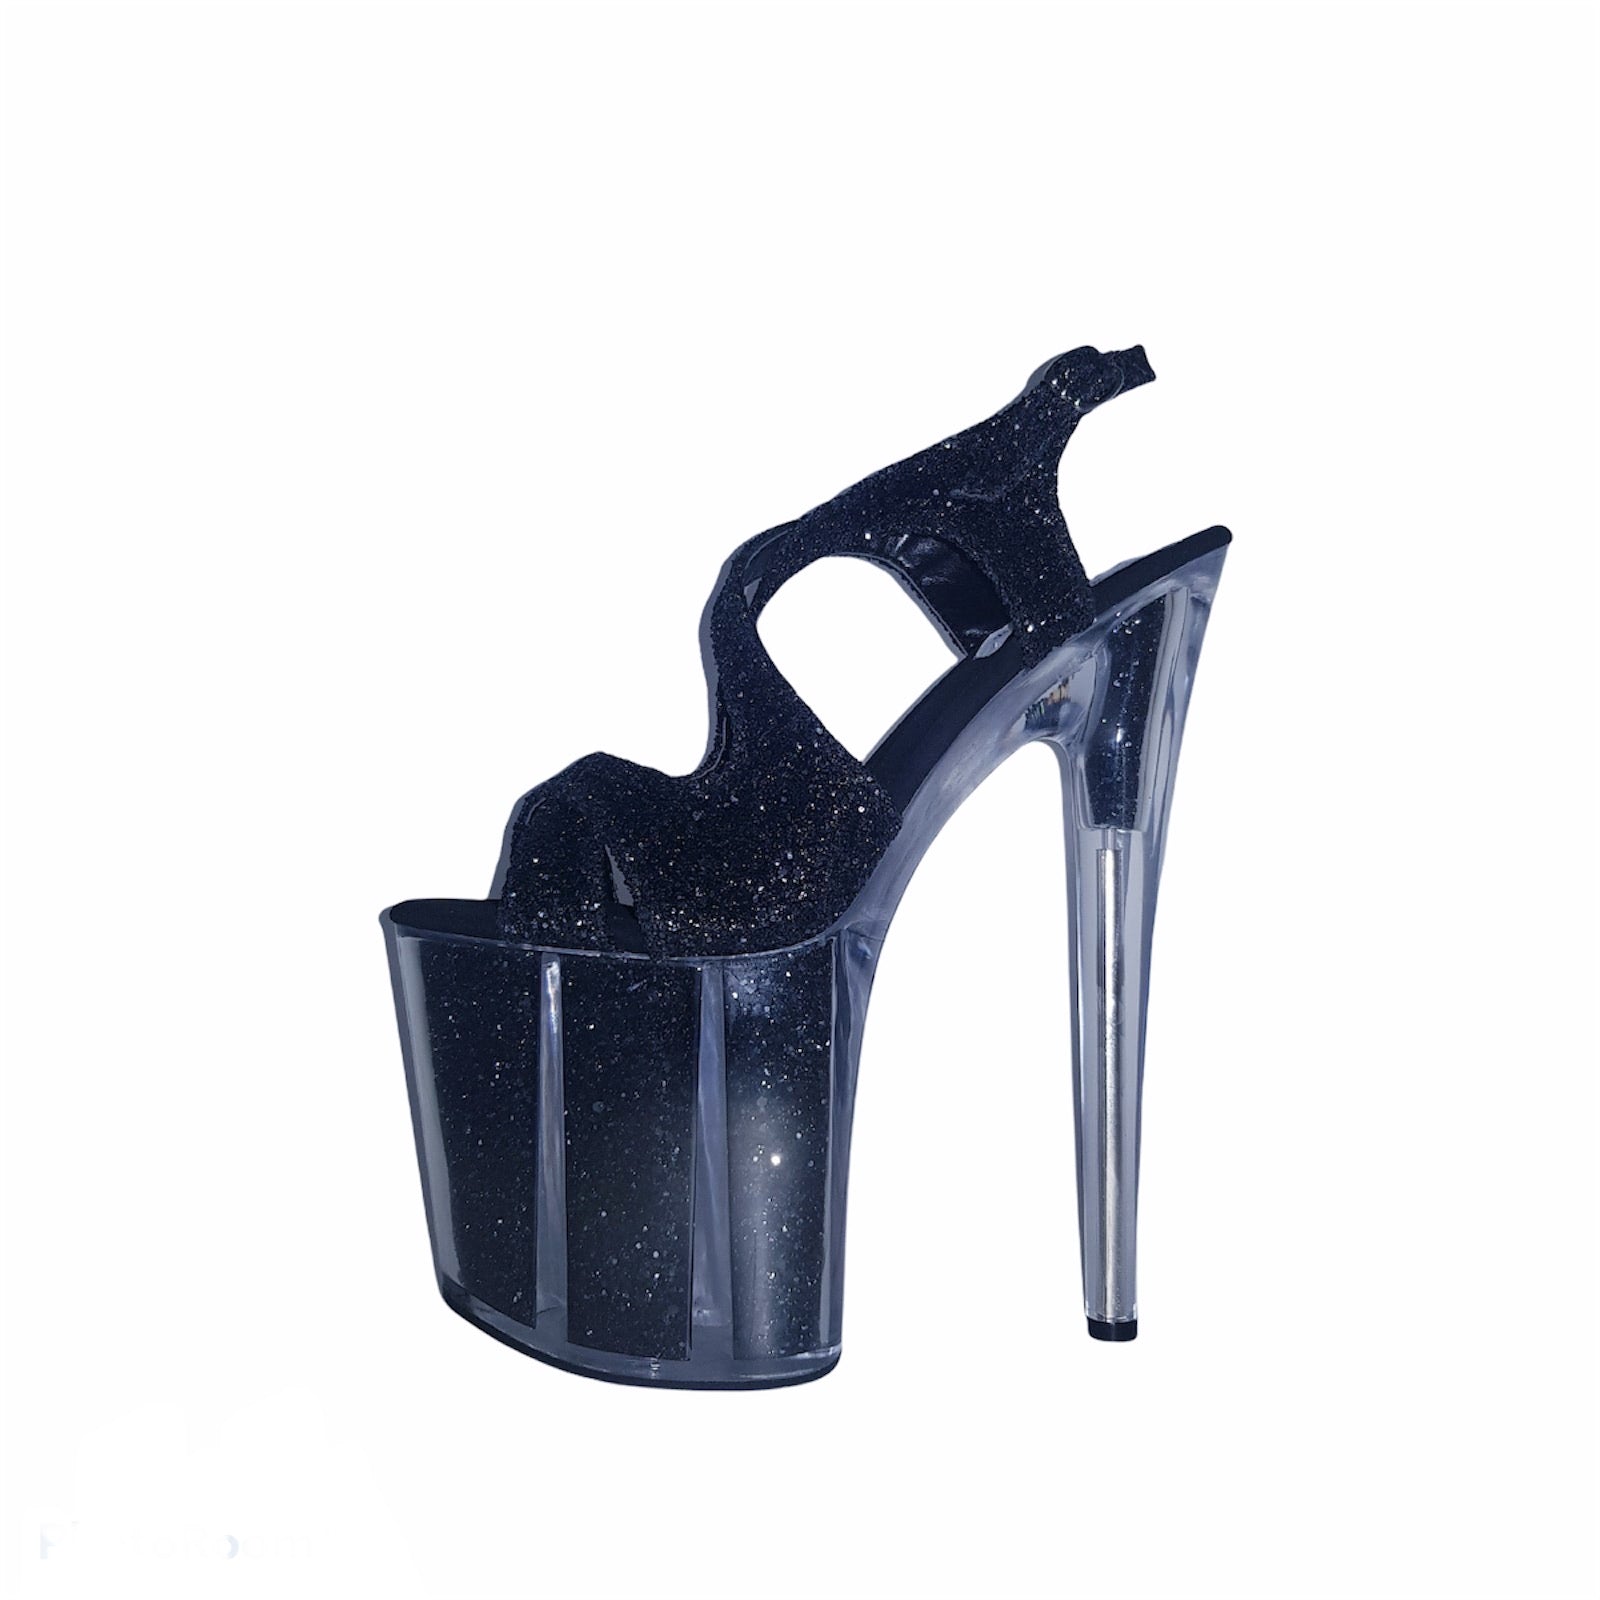 Black Glitter Texture Platform Heels | Shoes | PrettyLittleThing USA